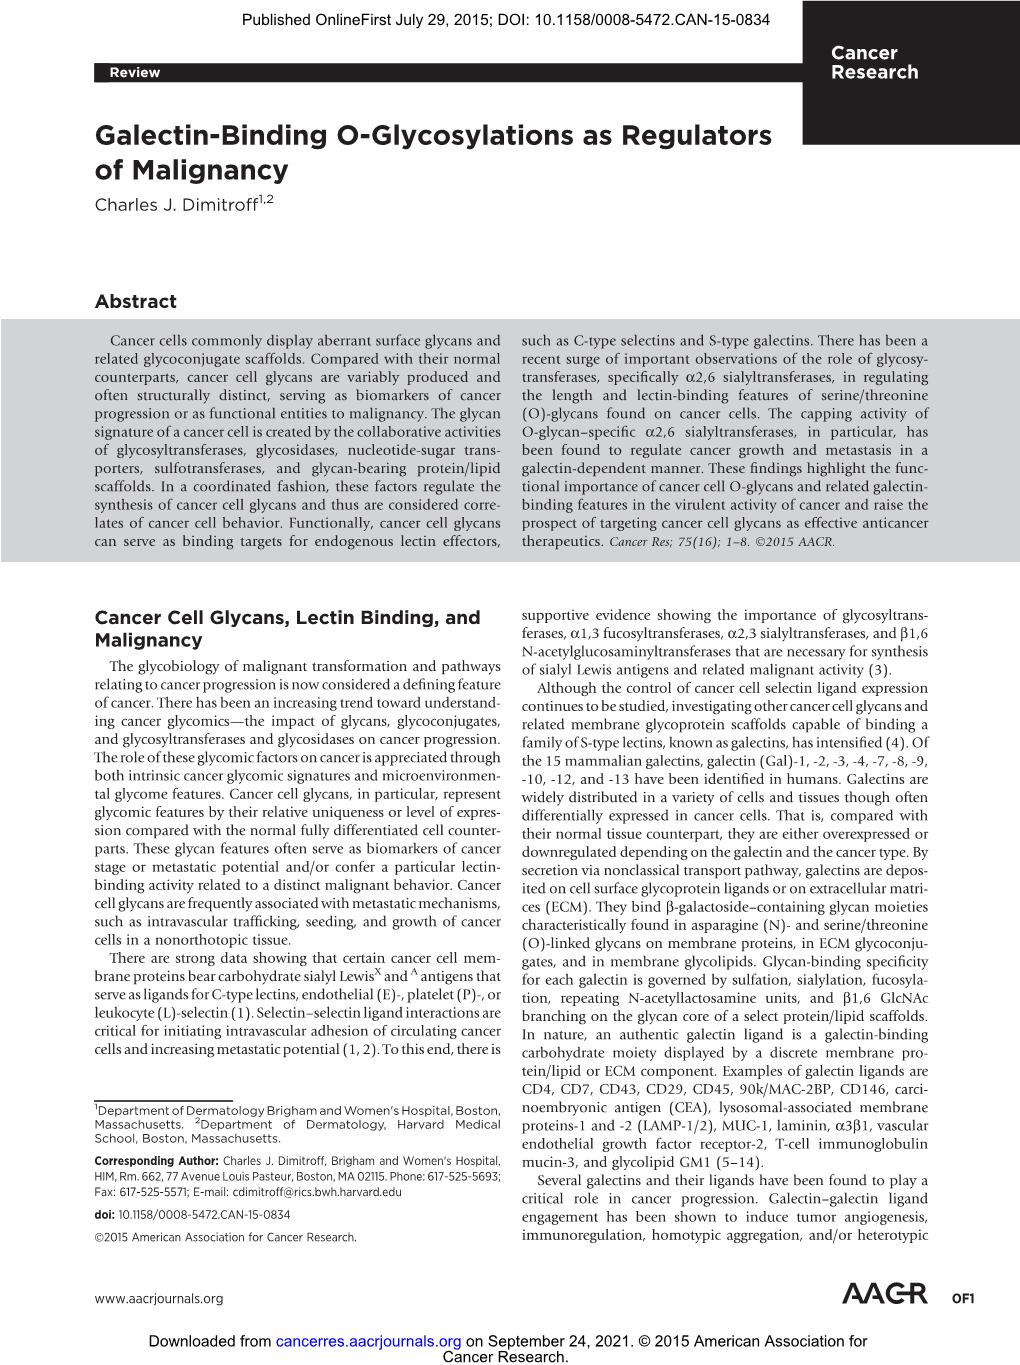 Galectin-Binding O-Glycosylations As Regulators of Malignancy Charles J